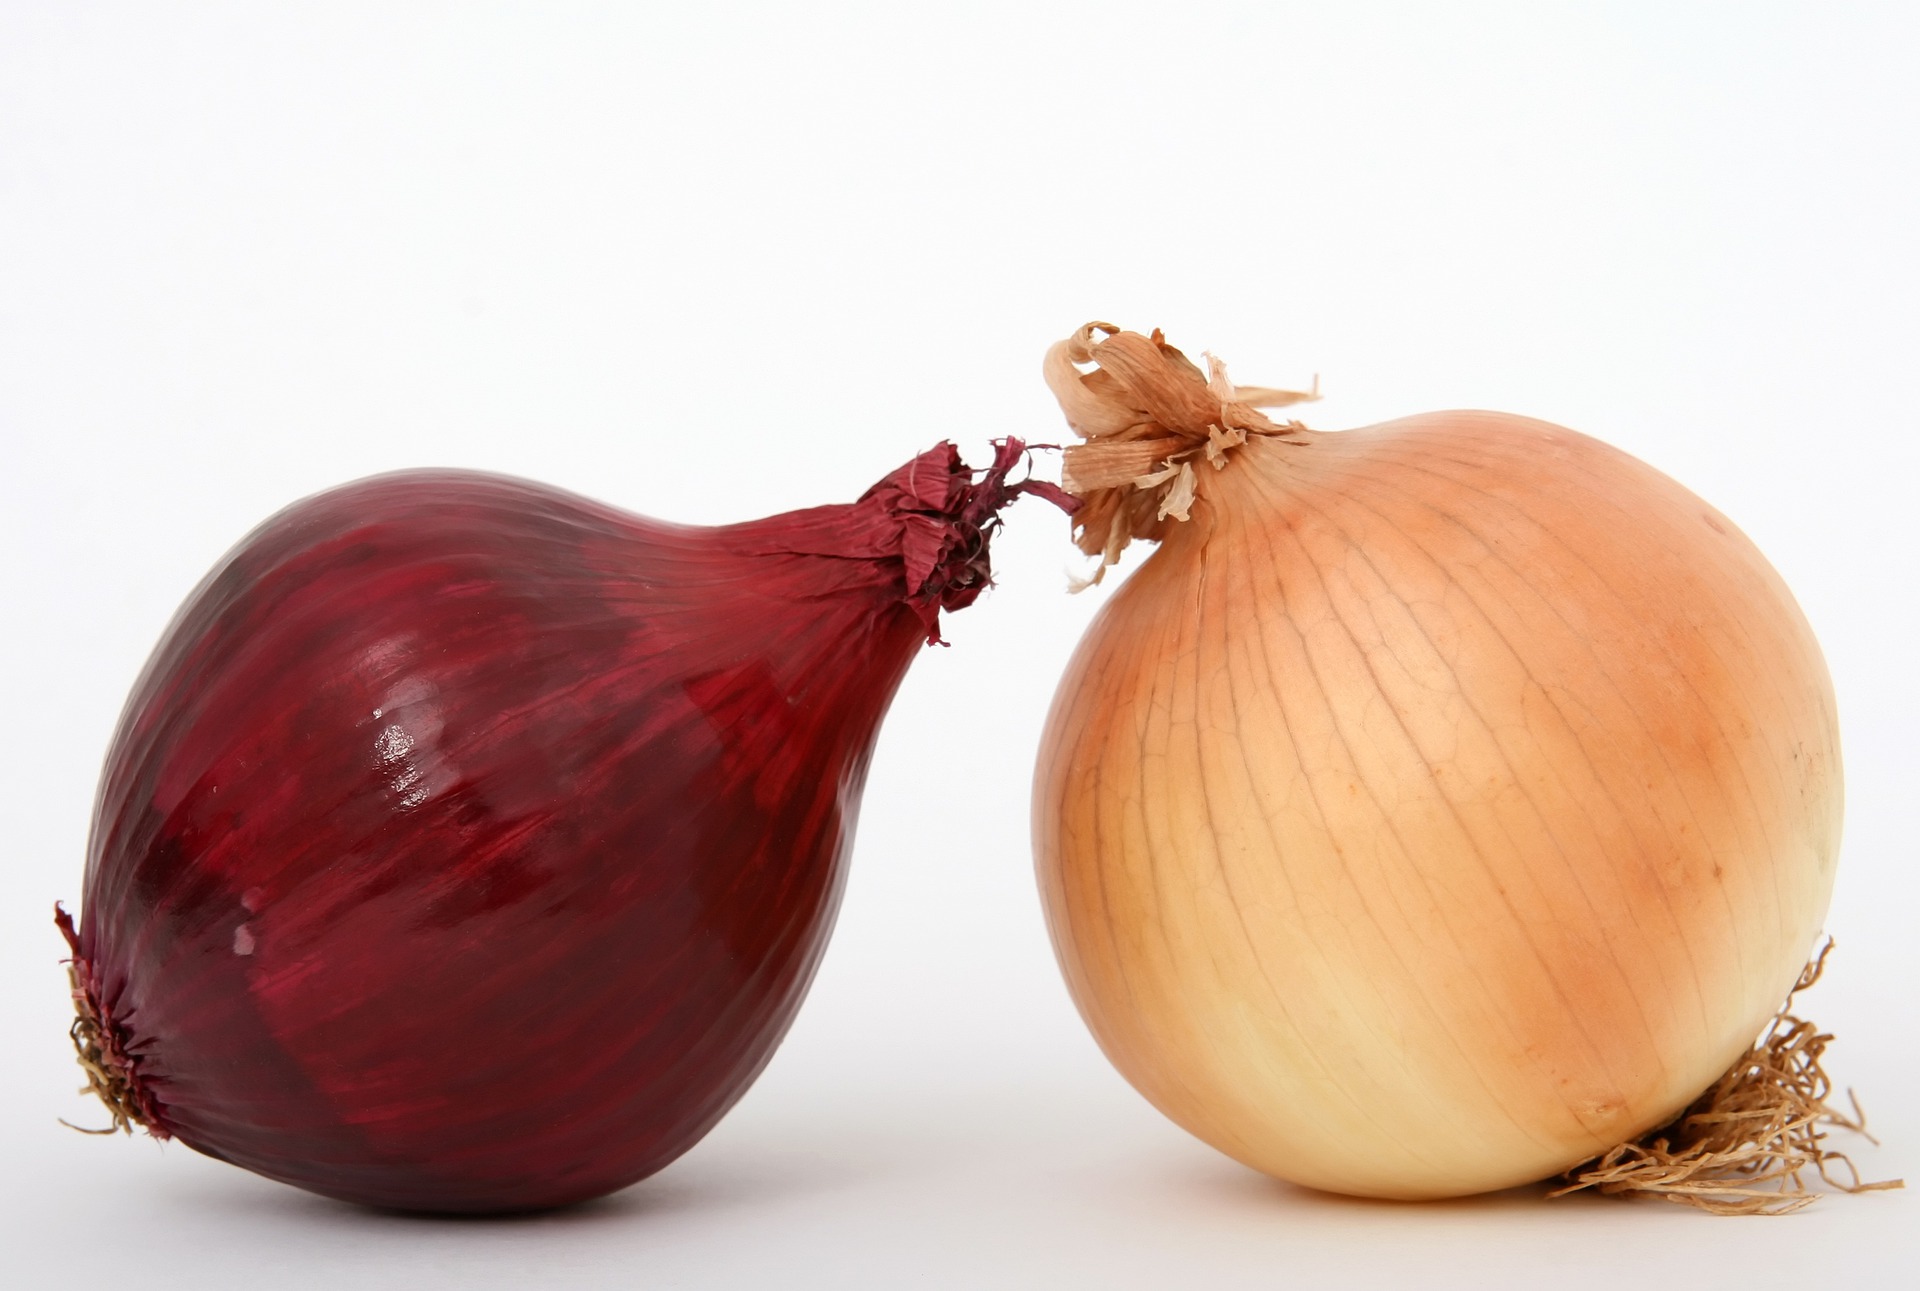 red vs white onions